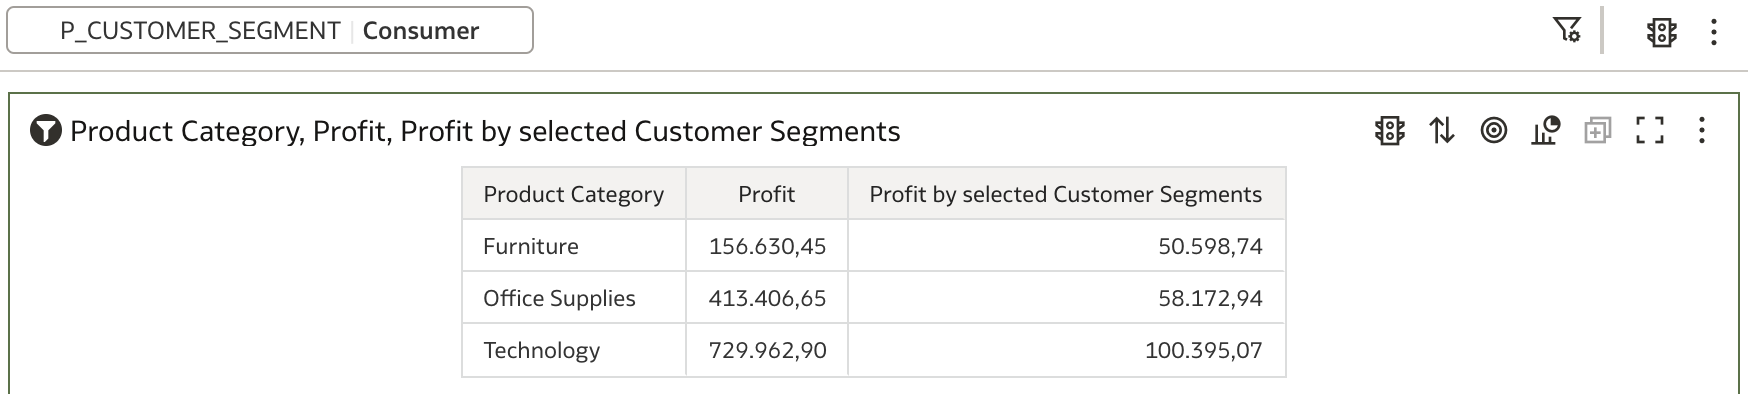 Using parameter in column filters - one customer segment selected